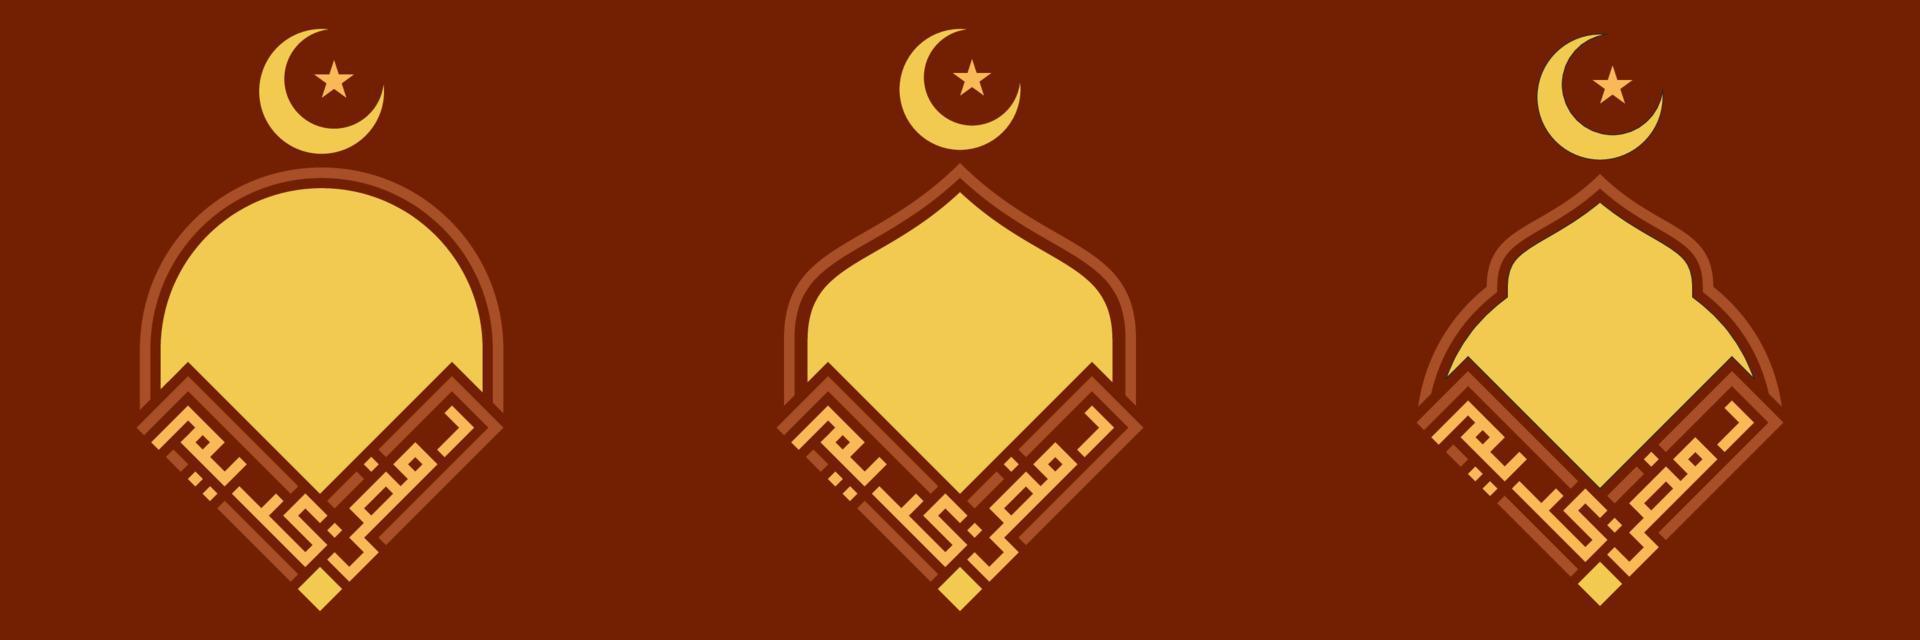 islamisch Tor oder Fenster mit Ramadan kareem Text vektor